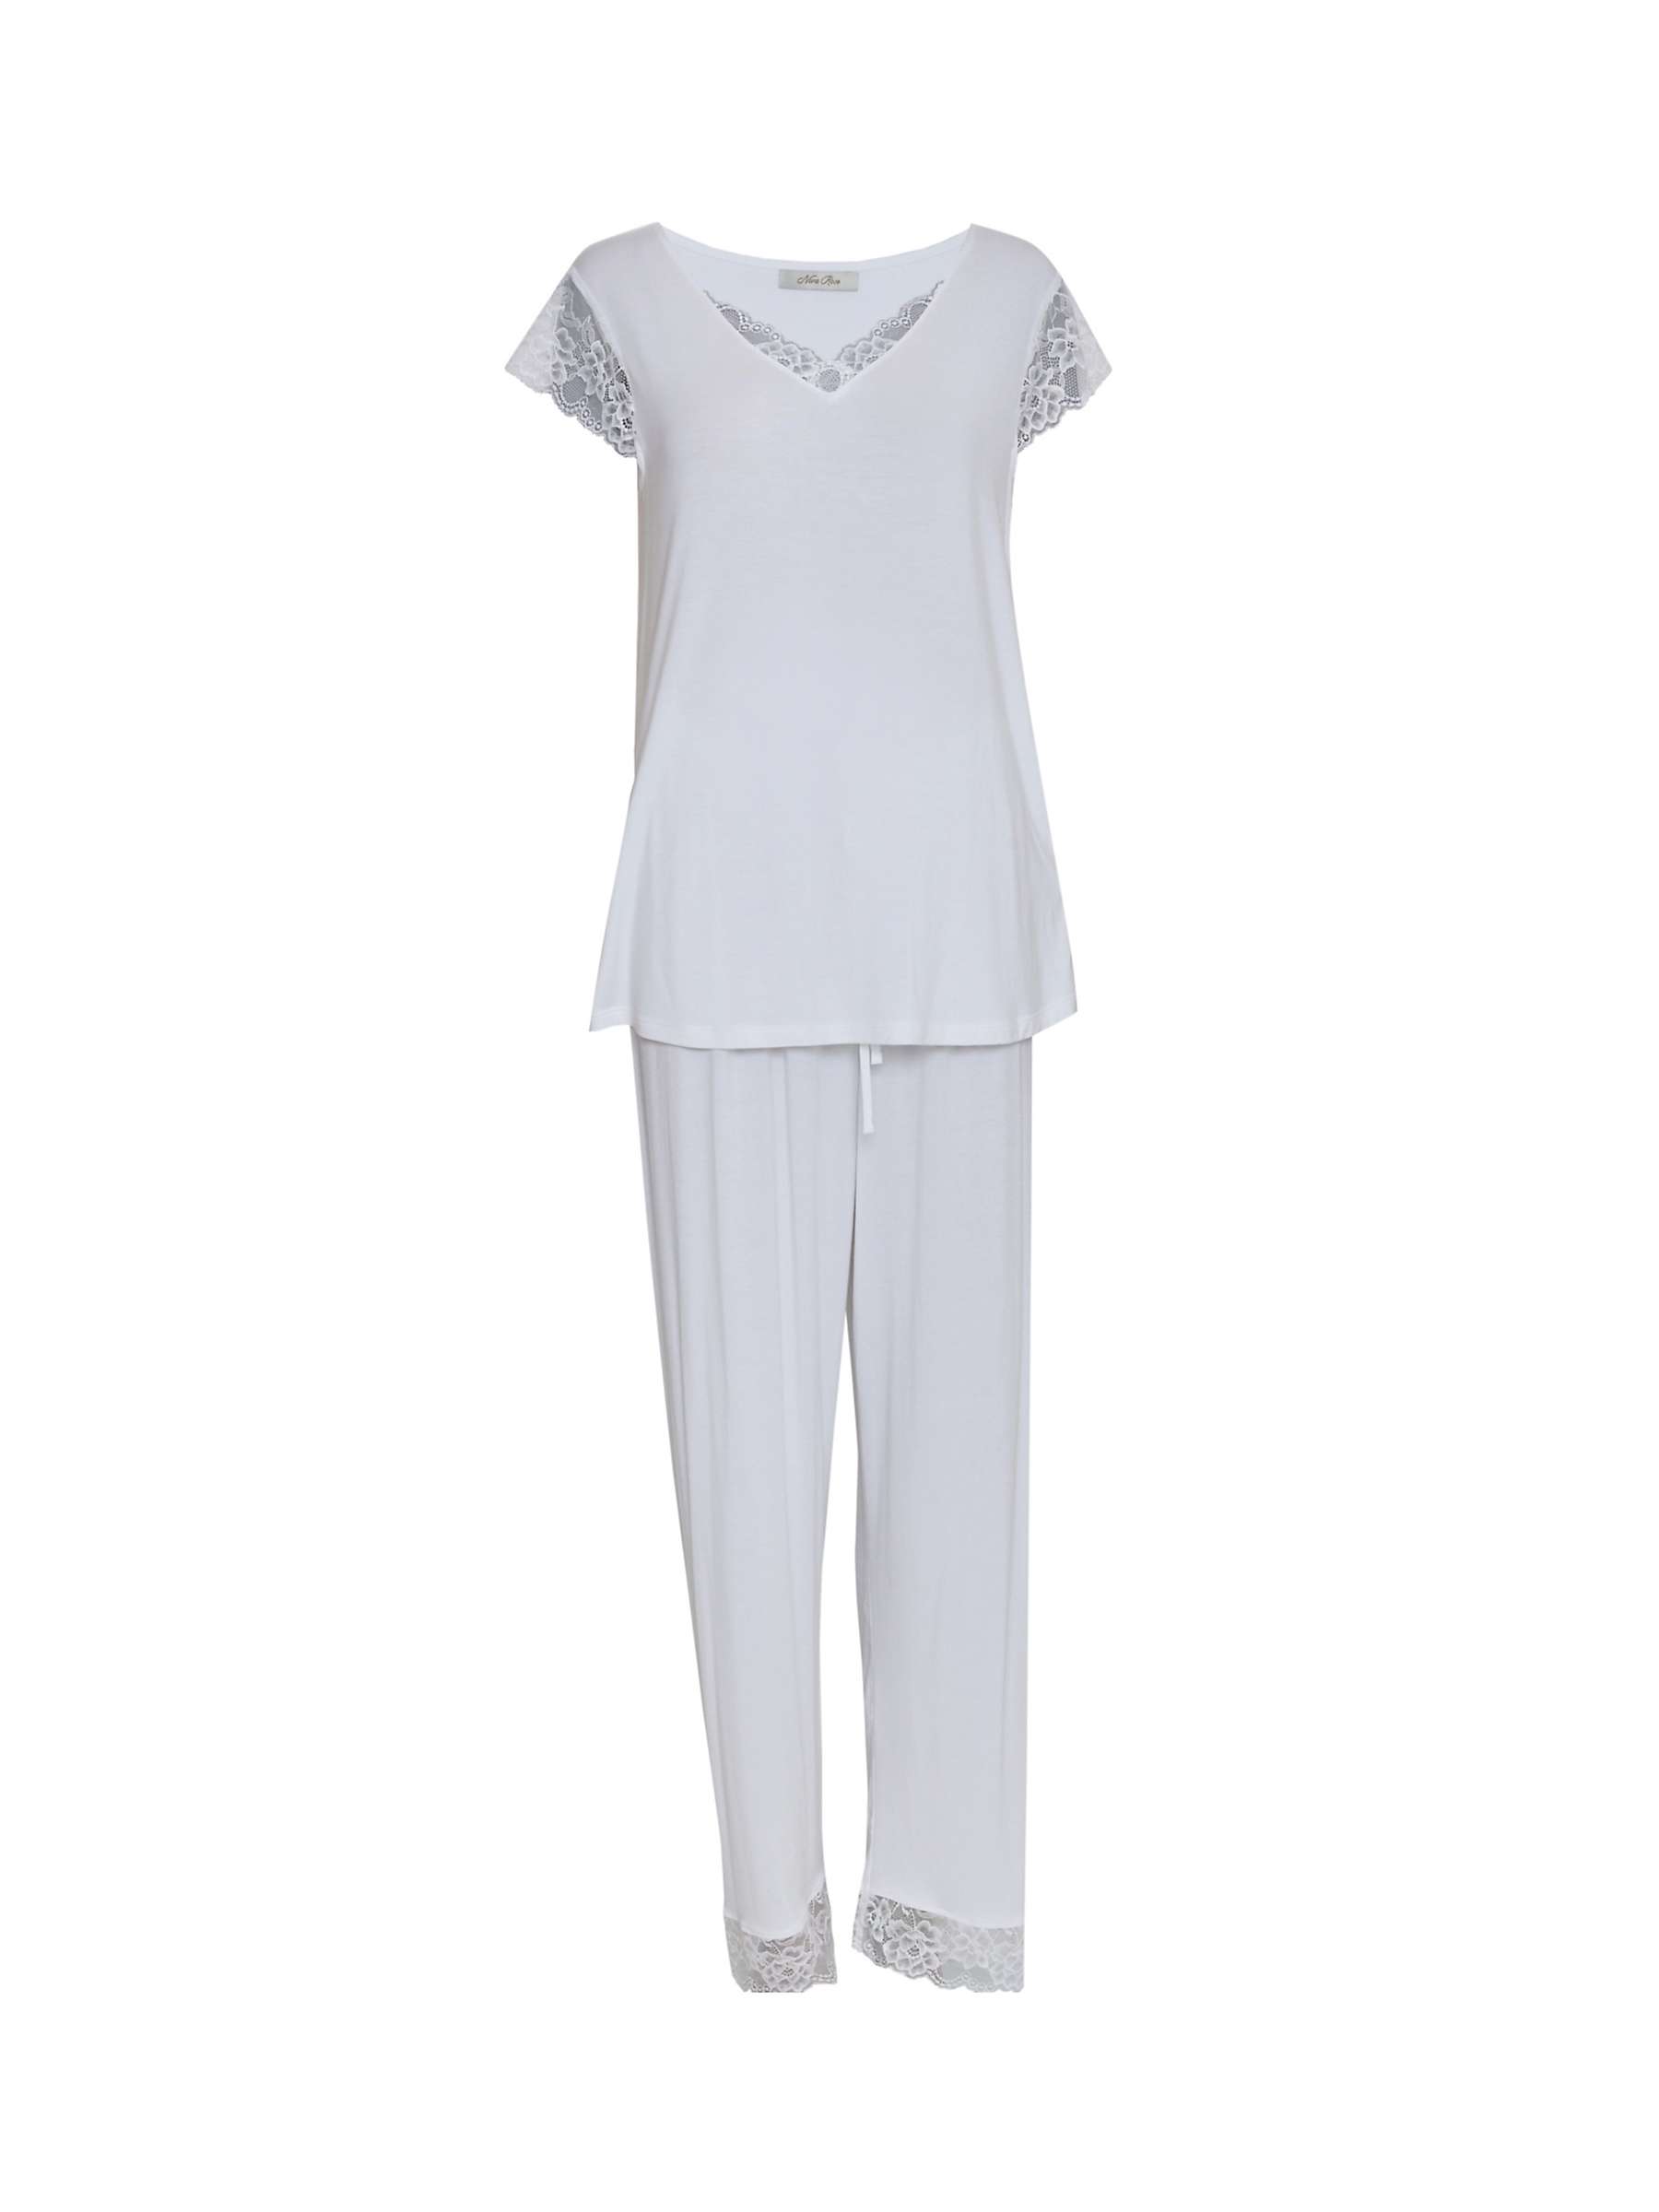 Buy Cyberjammies Tessa Jersey Lace Pyjama Set Online at johnlewis.com